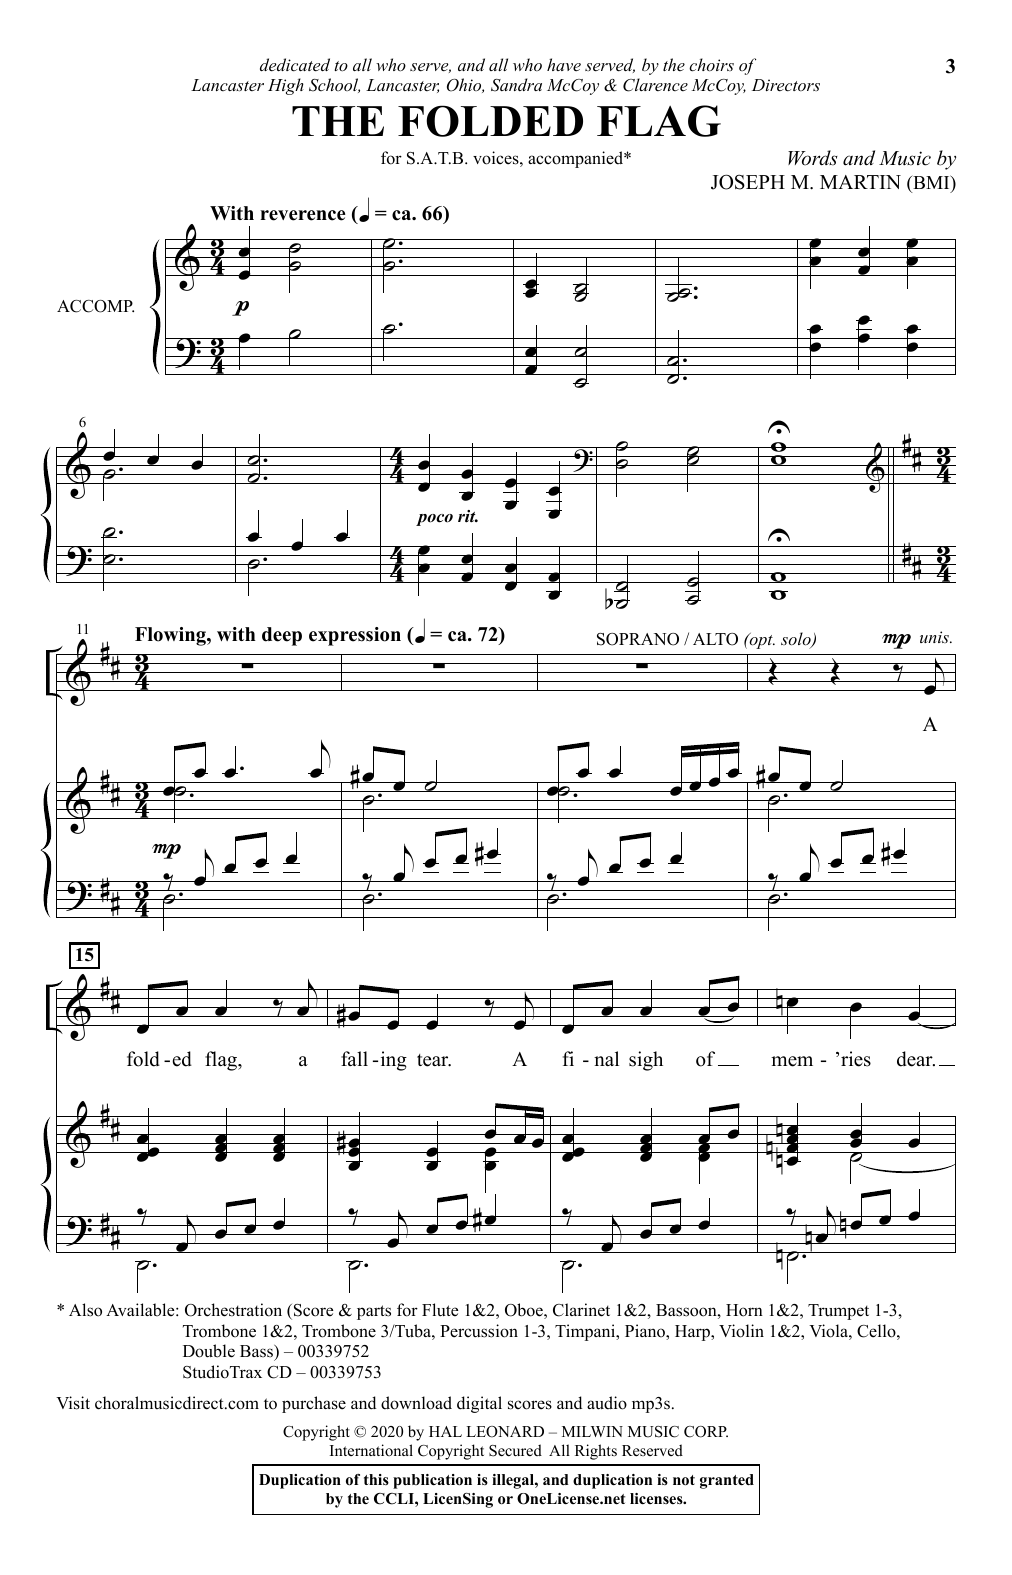 Joseph M. Martin The Folded Flag Sheet Music Notes & Chords for SATB Choir - Download or Print PDF